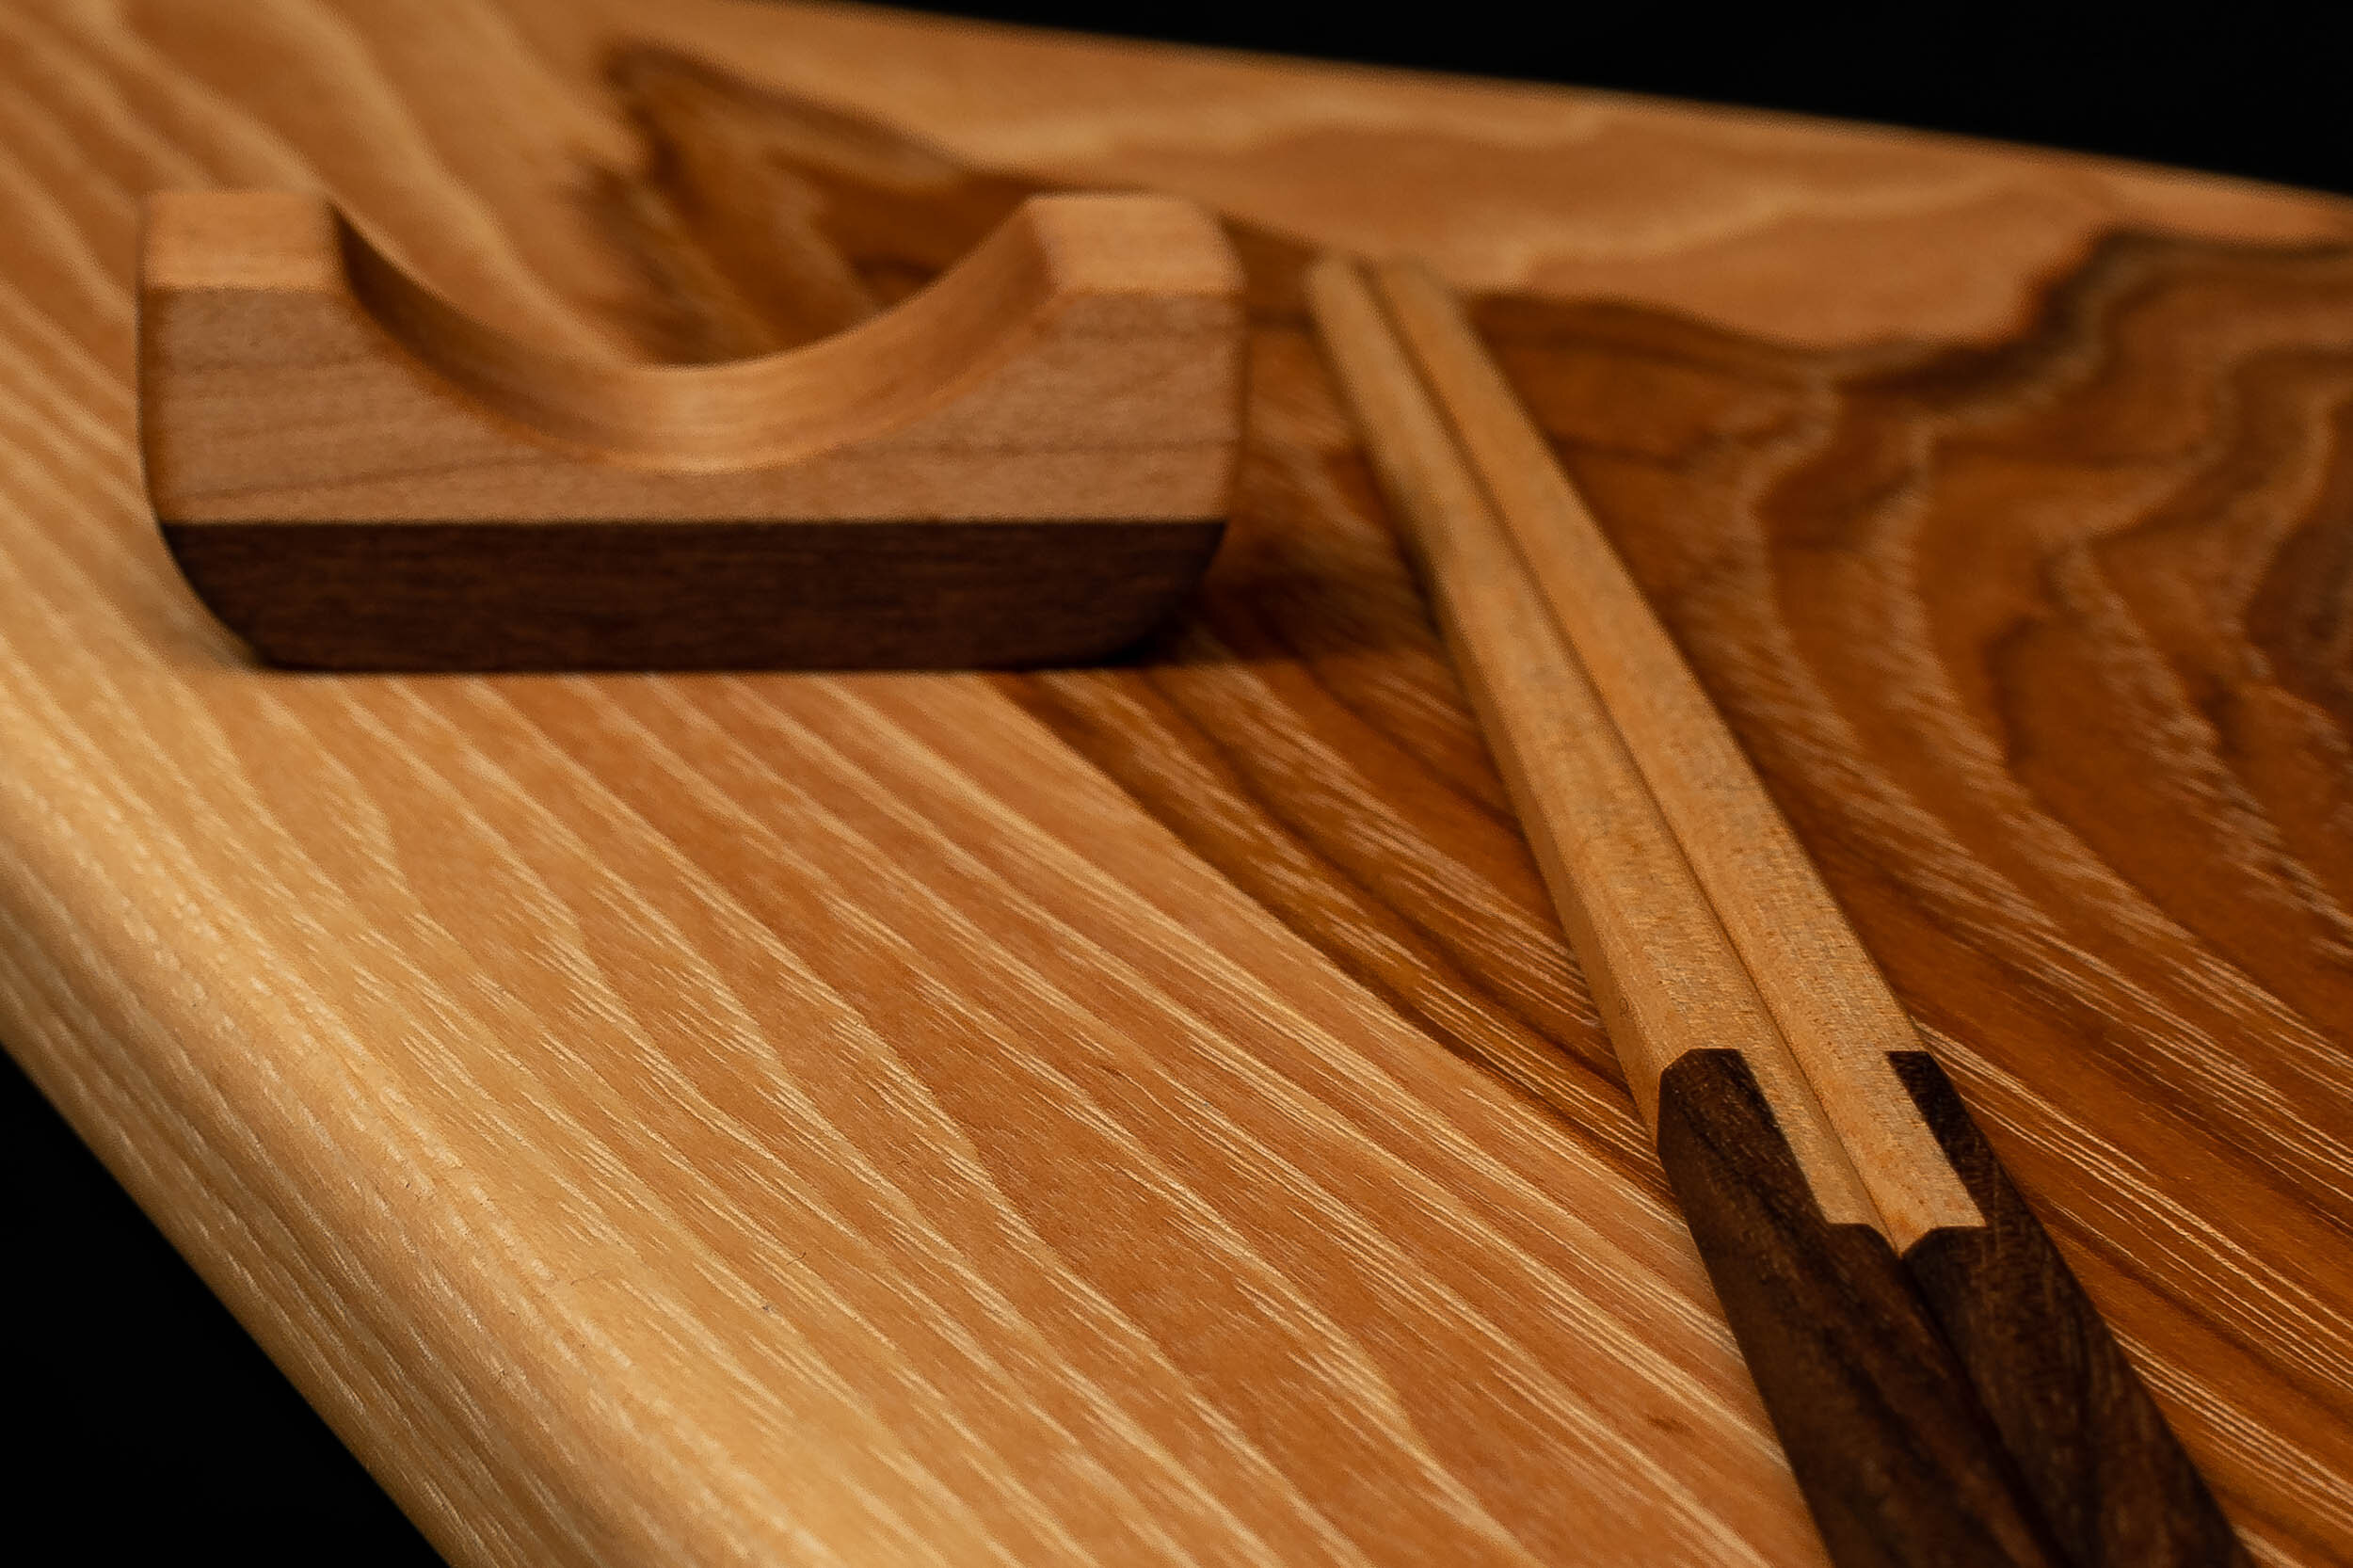 Natural Wood Chopsticks – Omoi Life Goods